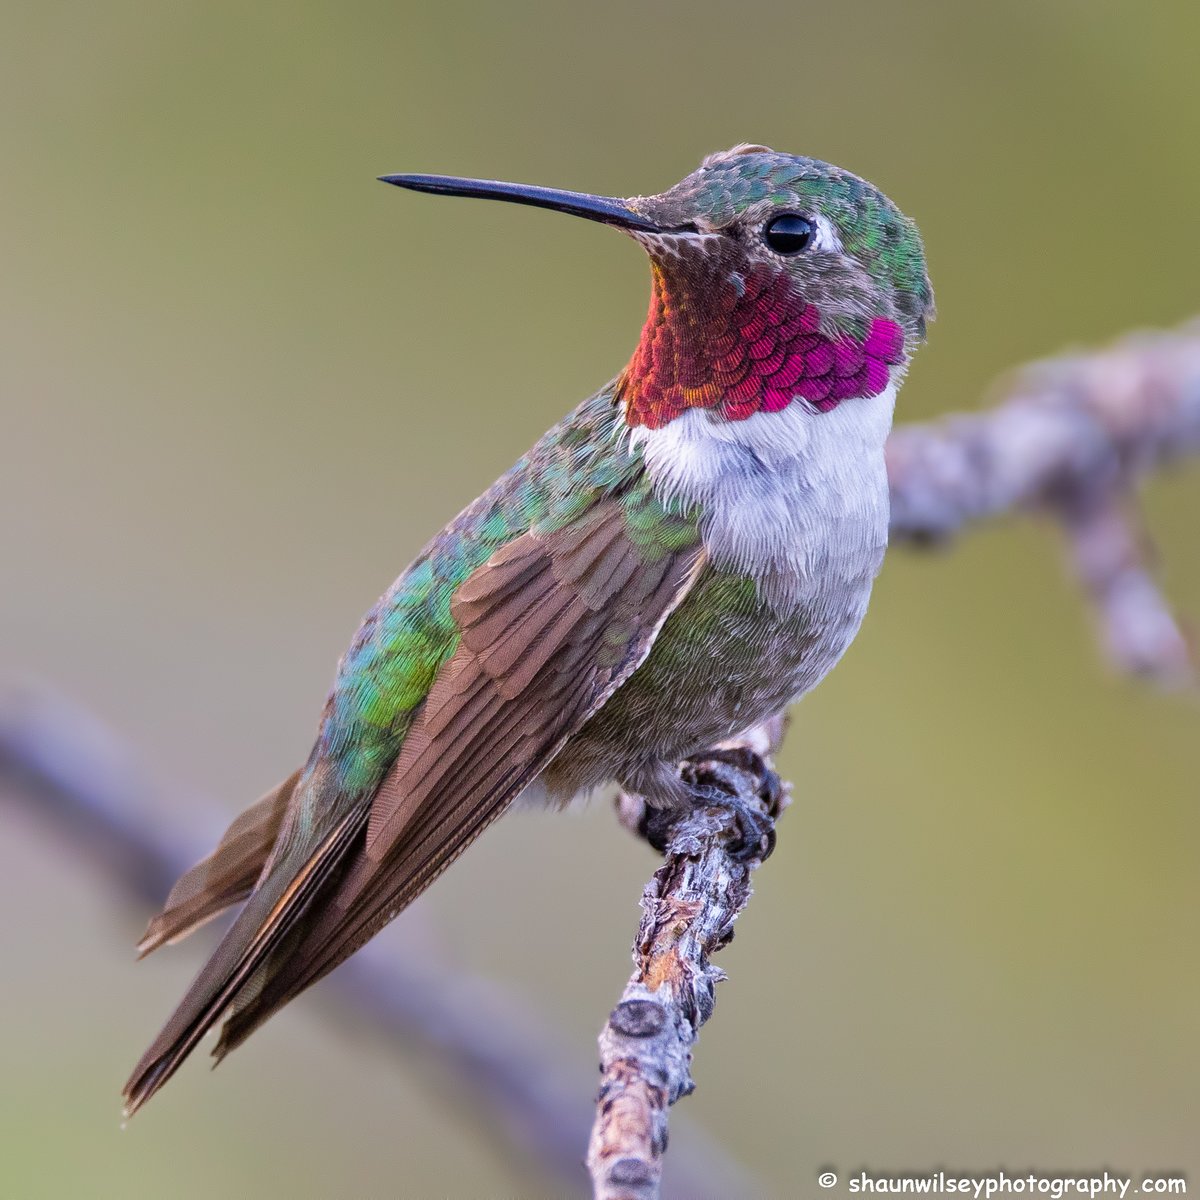 Broad-Tailed Hummingbird. Colorado 8/23/2022. #colorado #coloradophotography #photography #wildlife #wildlifephotography #bird #birds #hummingbird #hummingbirds #broadtailedhummingbird #broadtailedhummingbirds